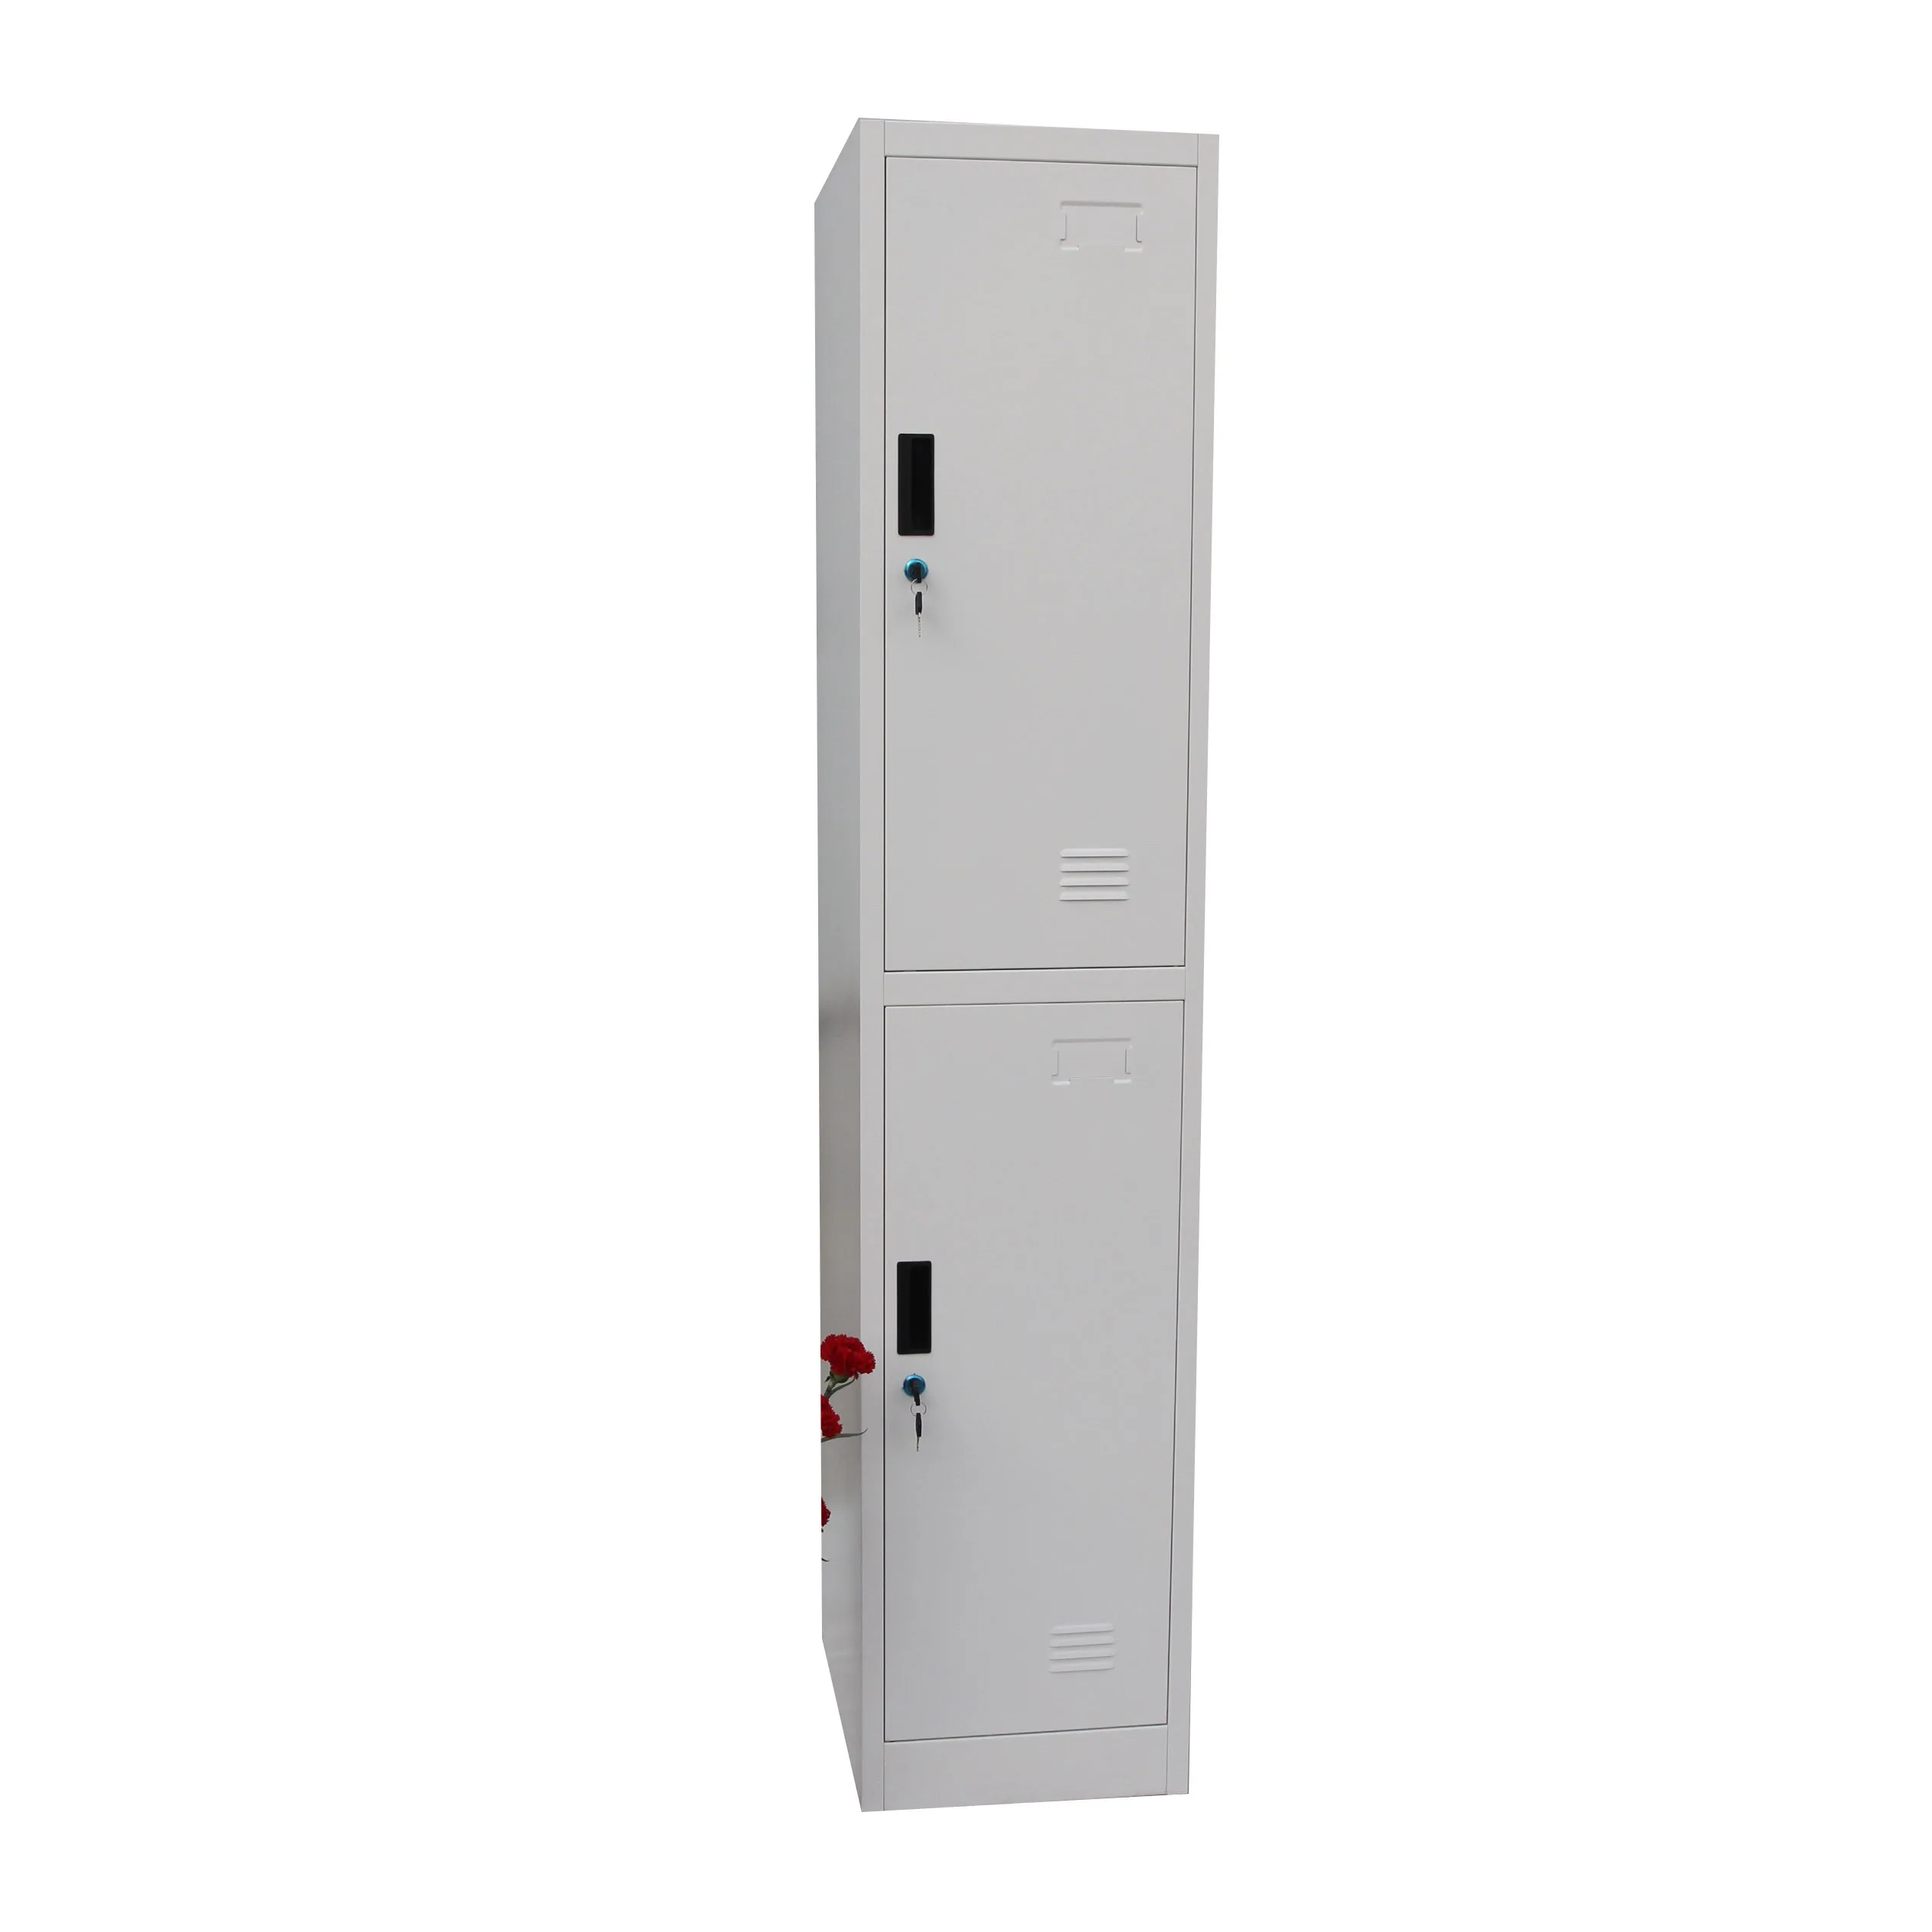 2 Doors Lightweight Steel Clothing Locker Wardrobe Cabinet Buy 2